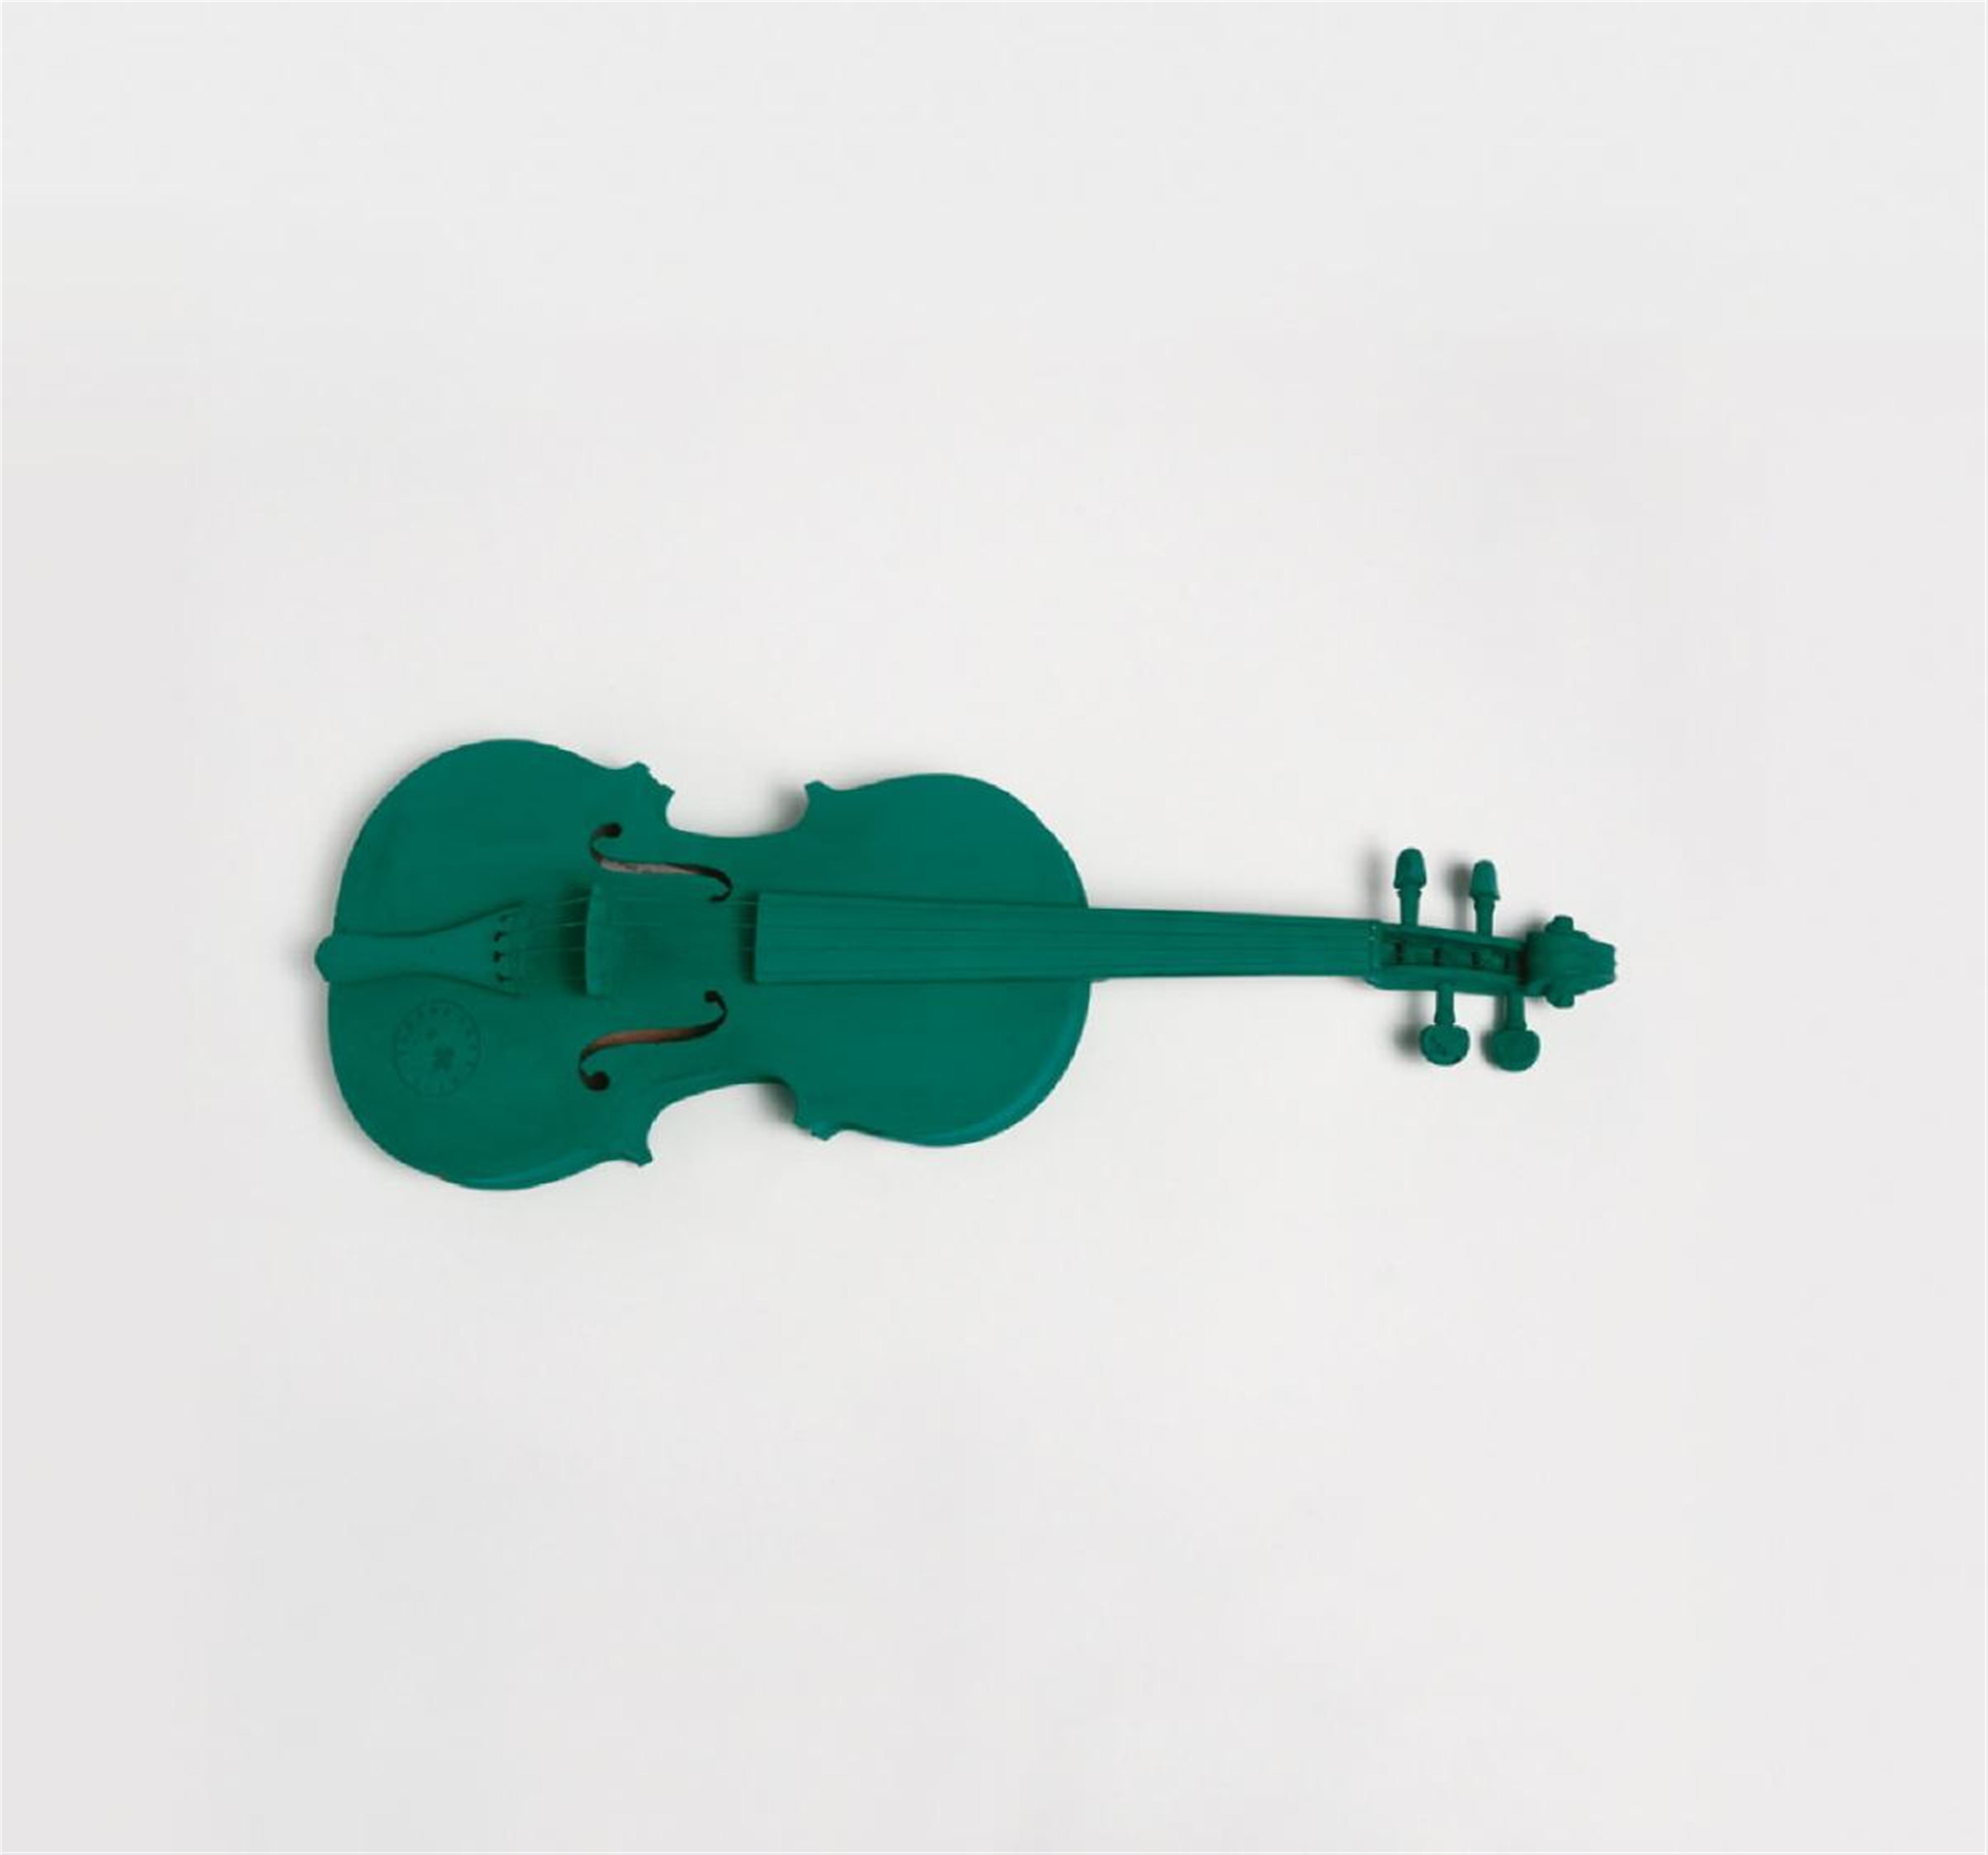 Joseph Beuys - Musik als Grün - image-1